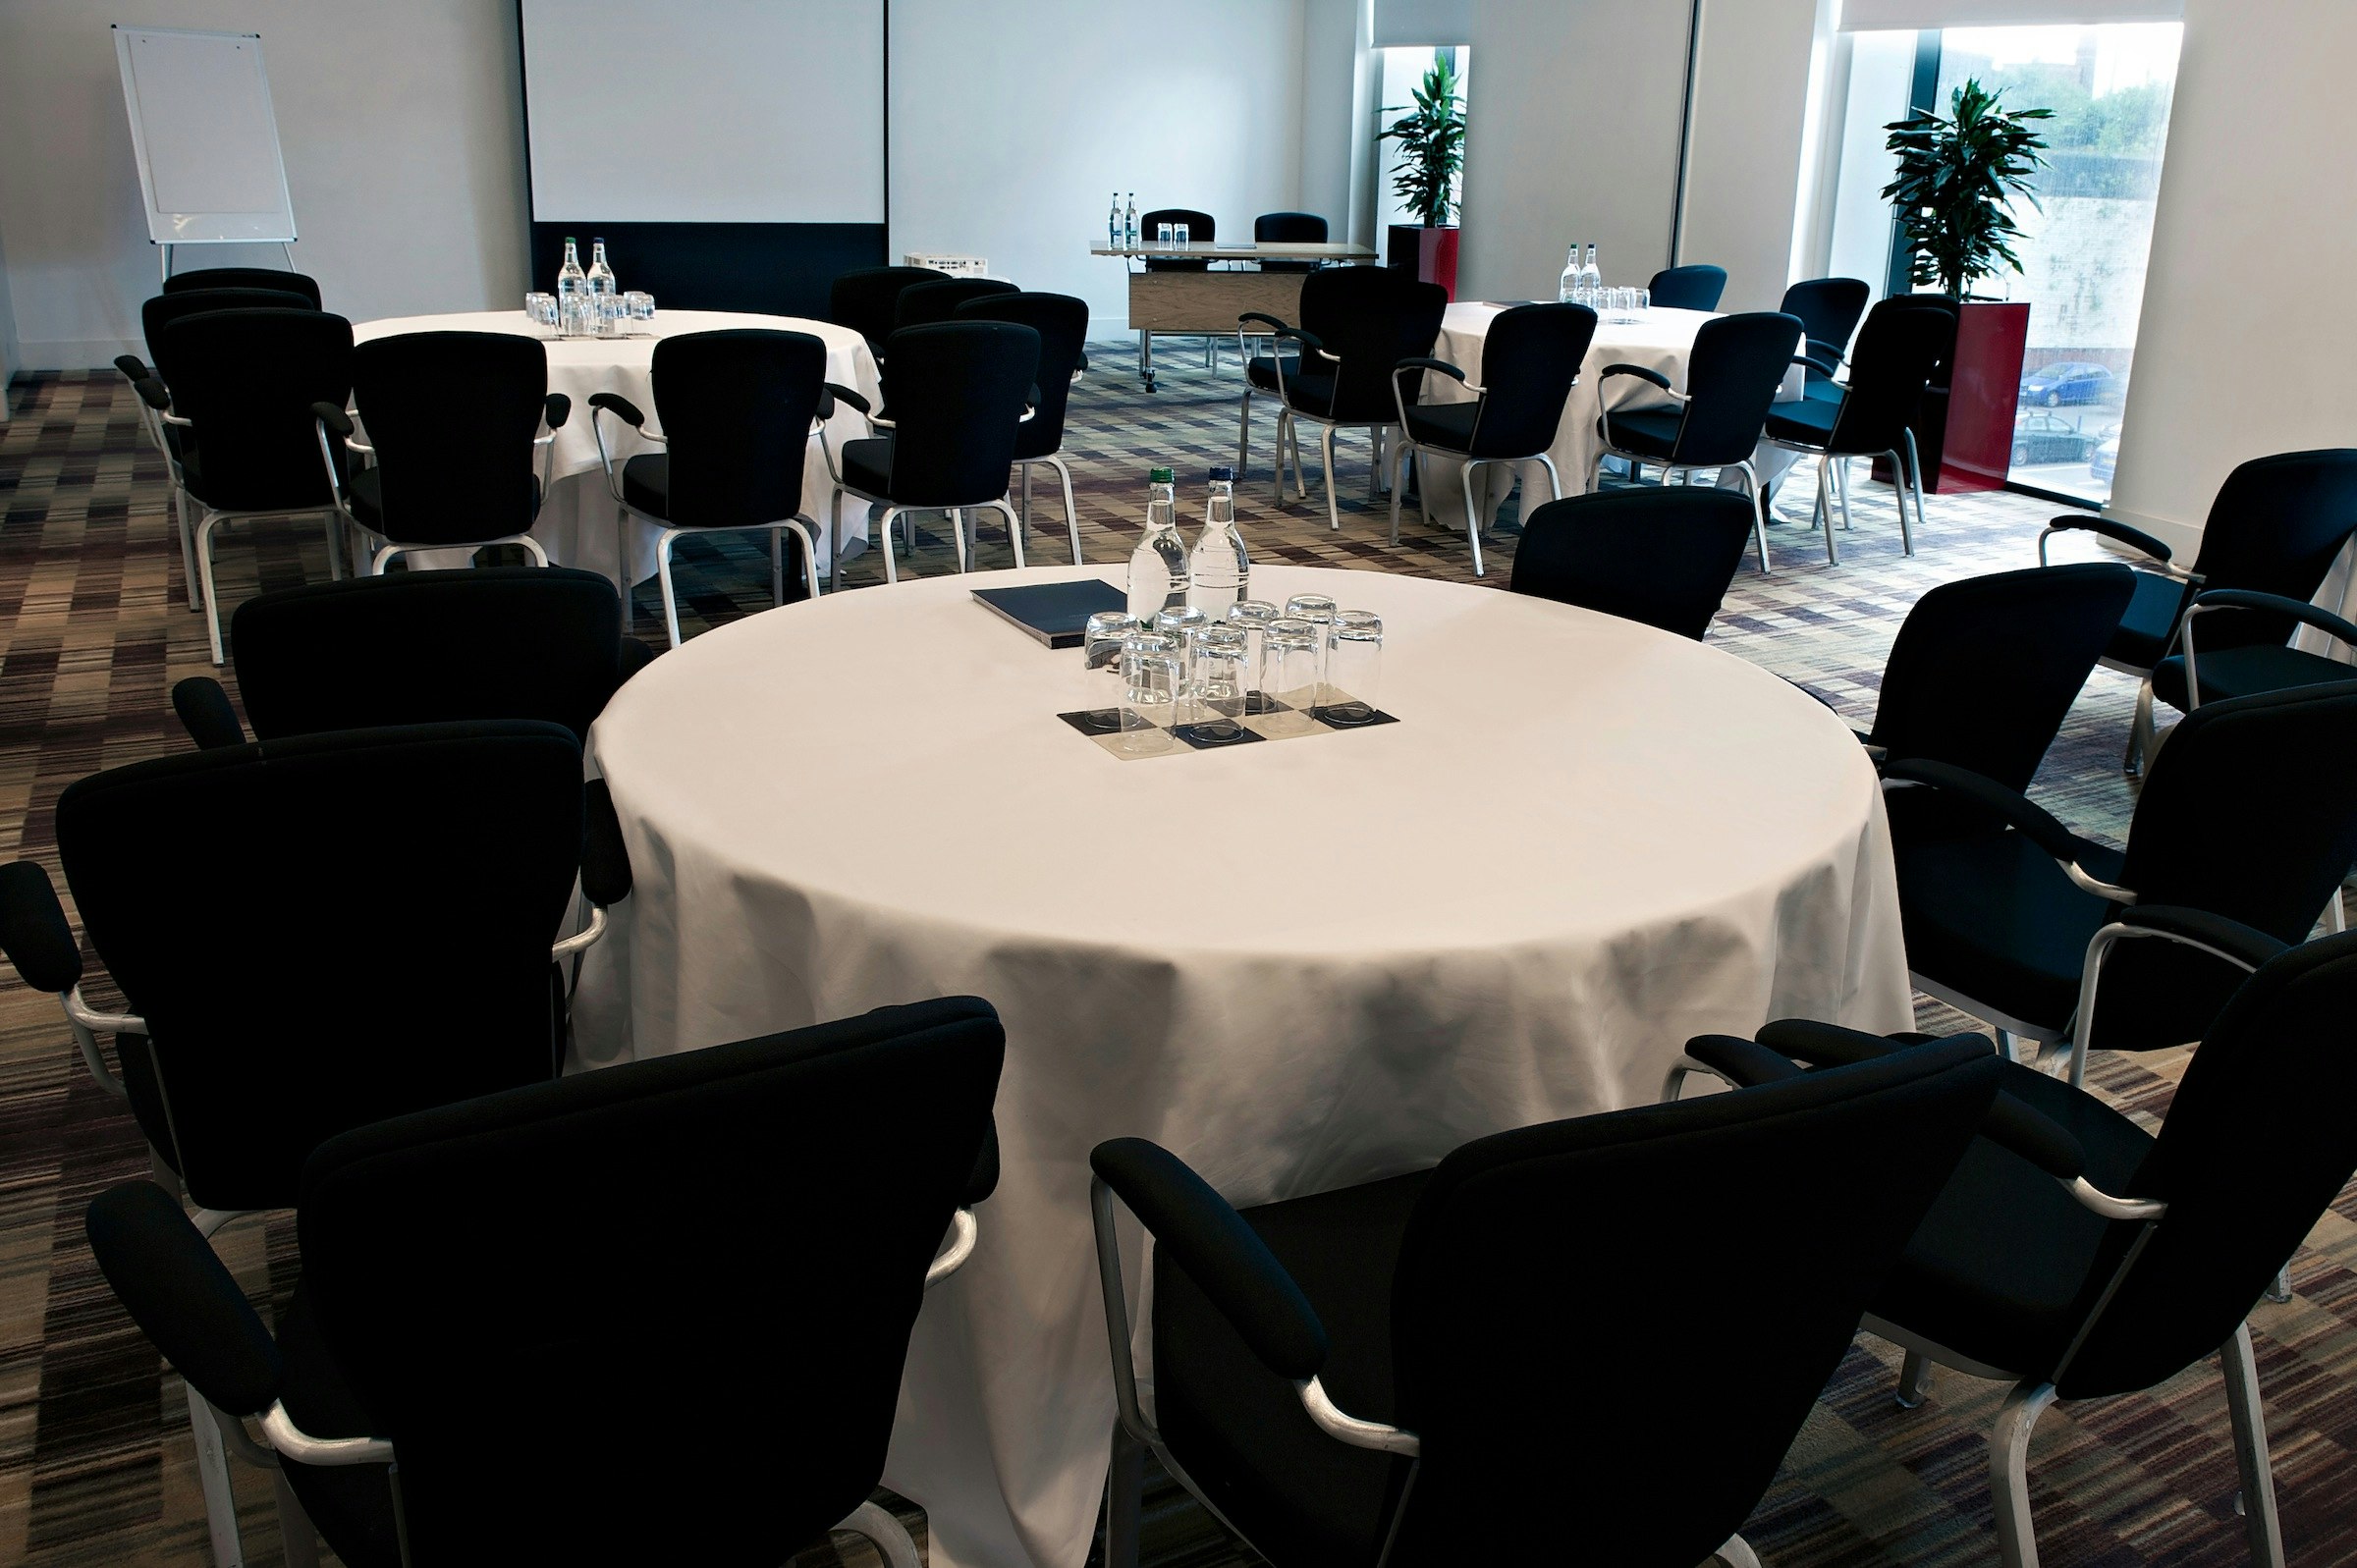 Hilton Deansgate - Meeting Rooms 1-10 image 2